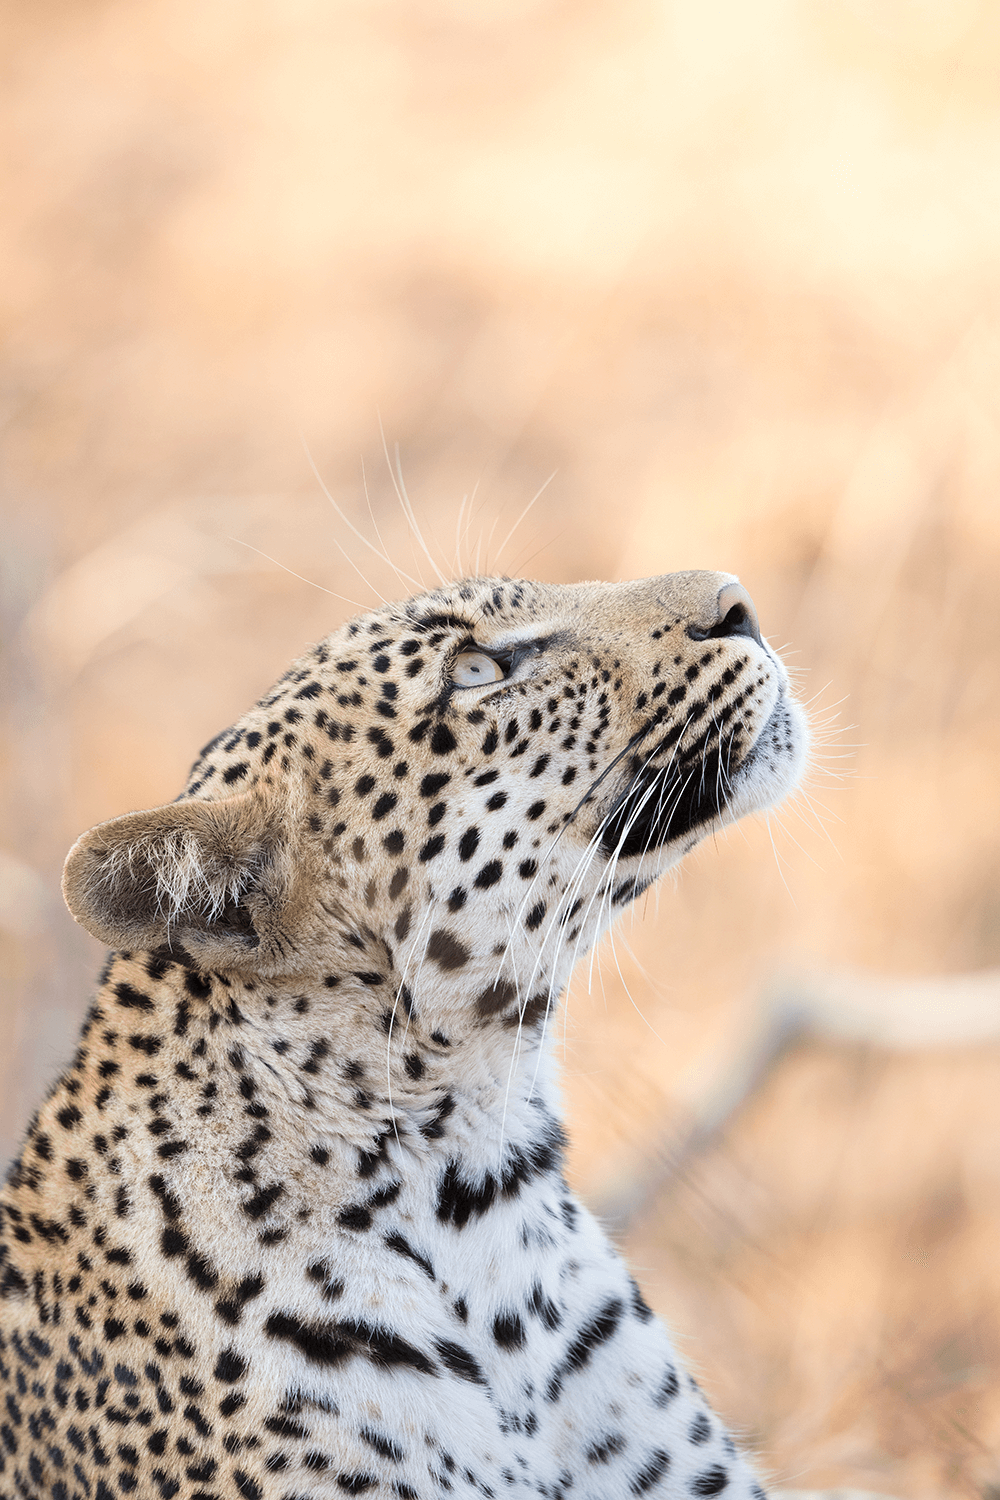 Image of a cheetah by Robert Irwin